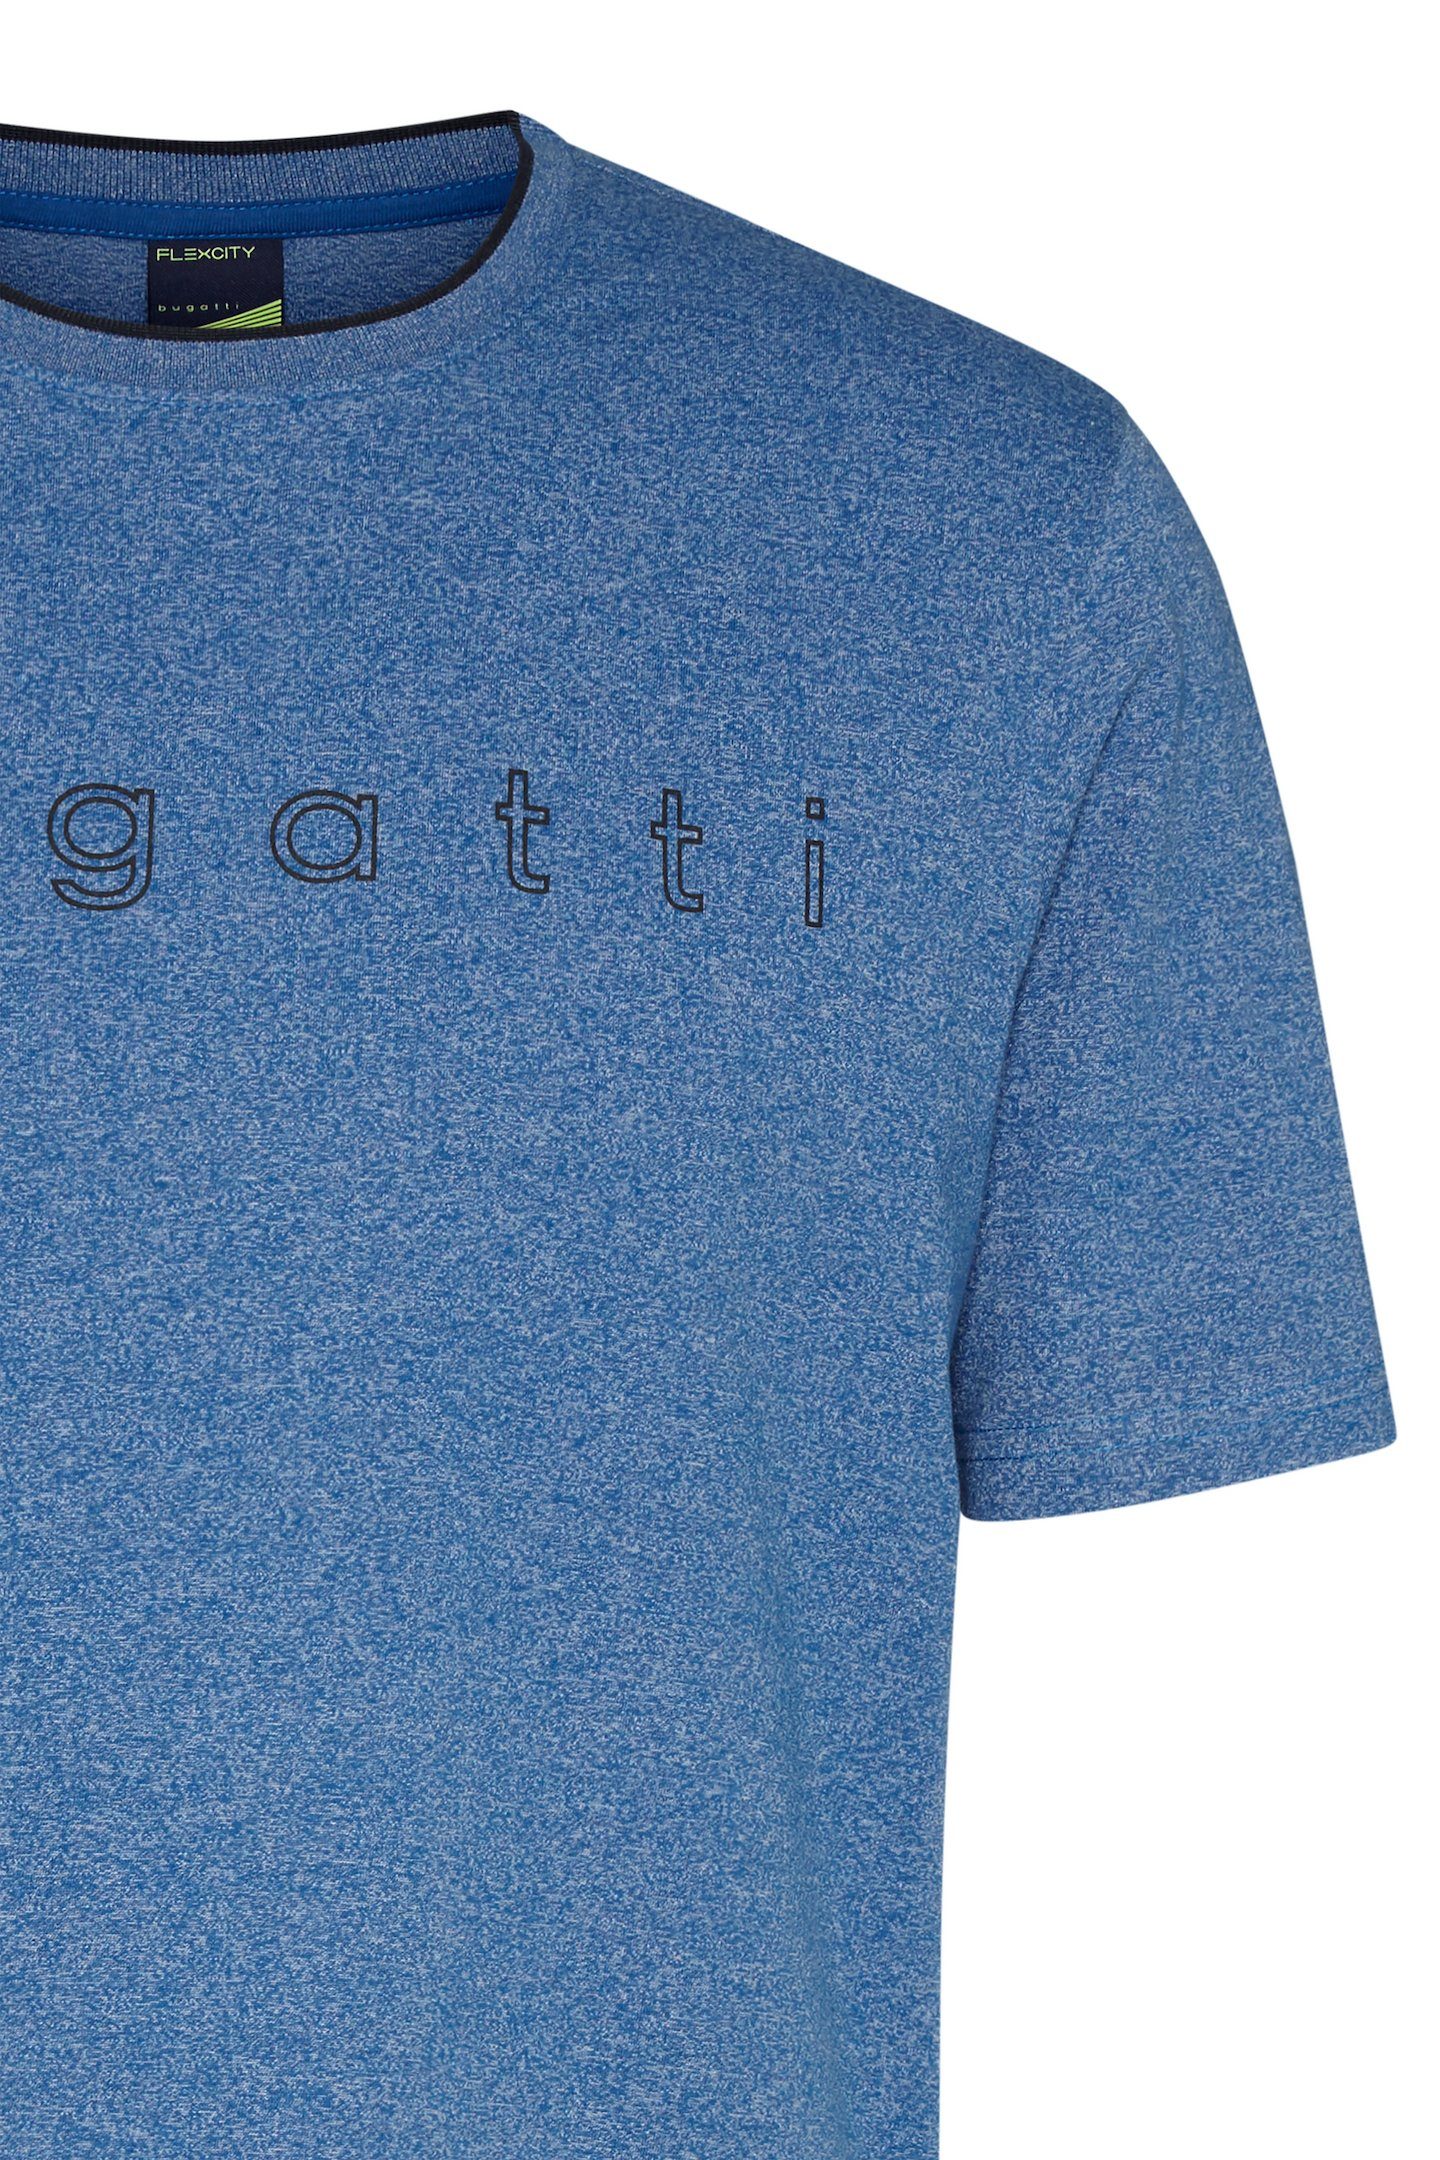 Logo-Print großem blau bugatti bugatti mit T-Shirt